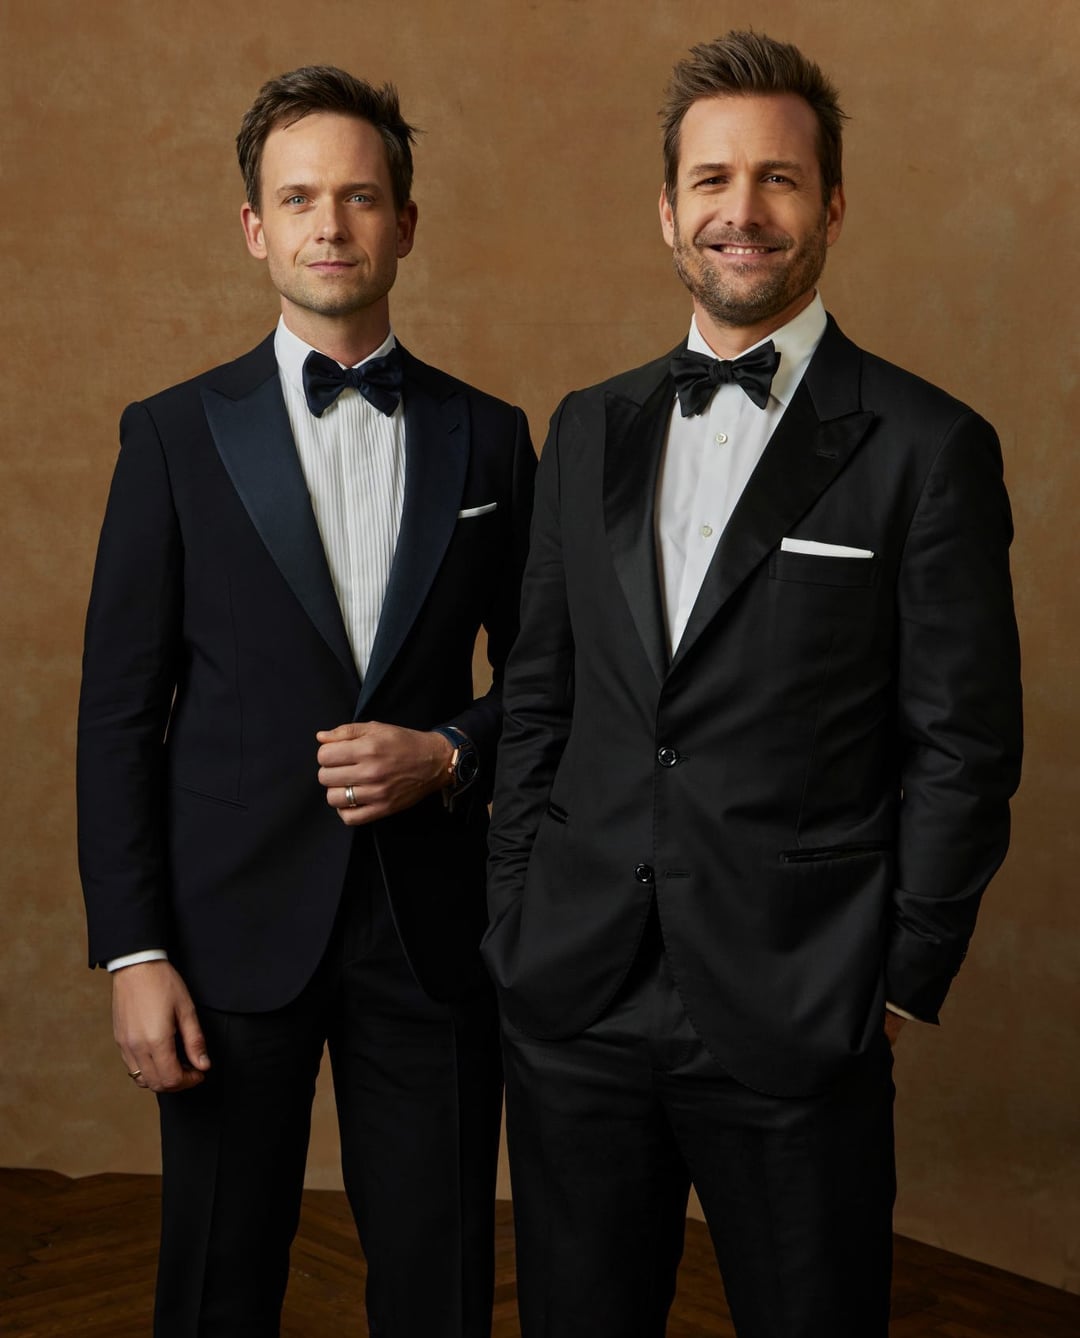 Suits cast reunion at the Golden Globe Awards INBELLA